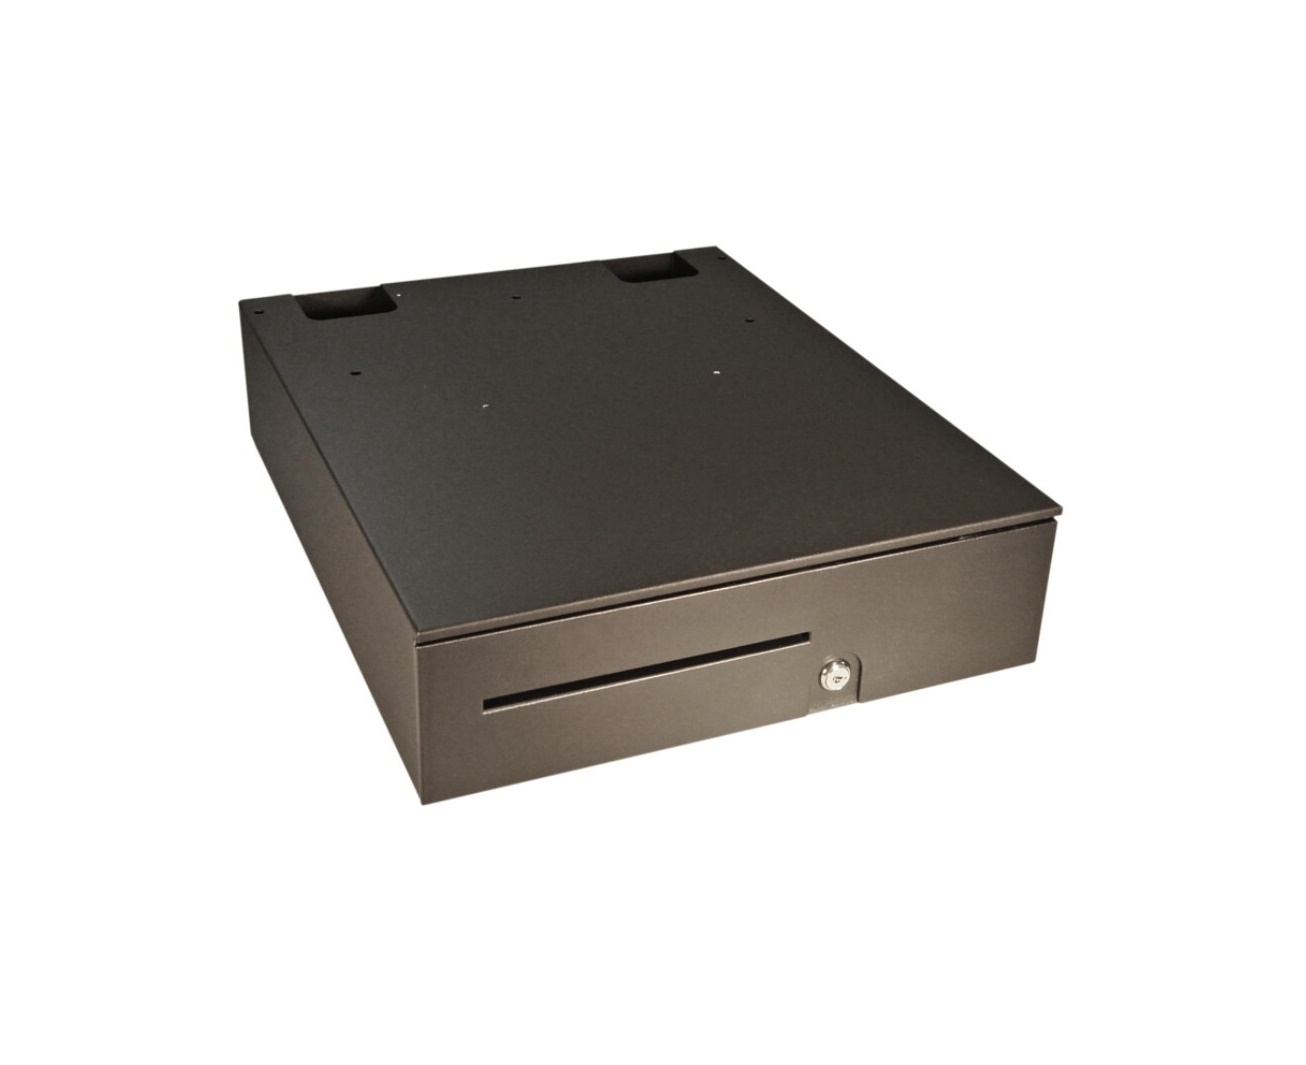 Apg Cash Drawer Series 100 Netpro T480A-BL1616-K2